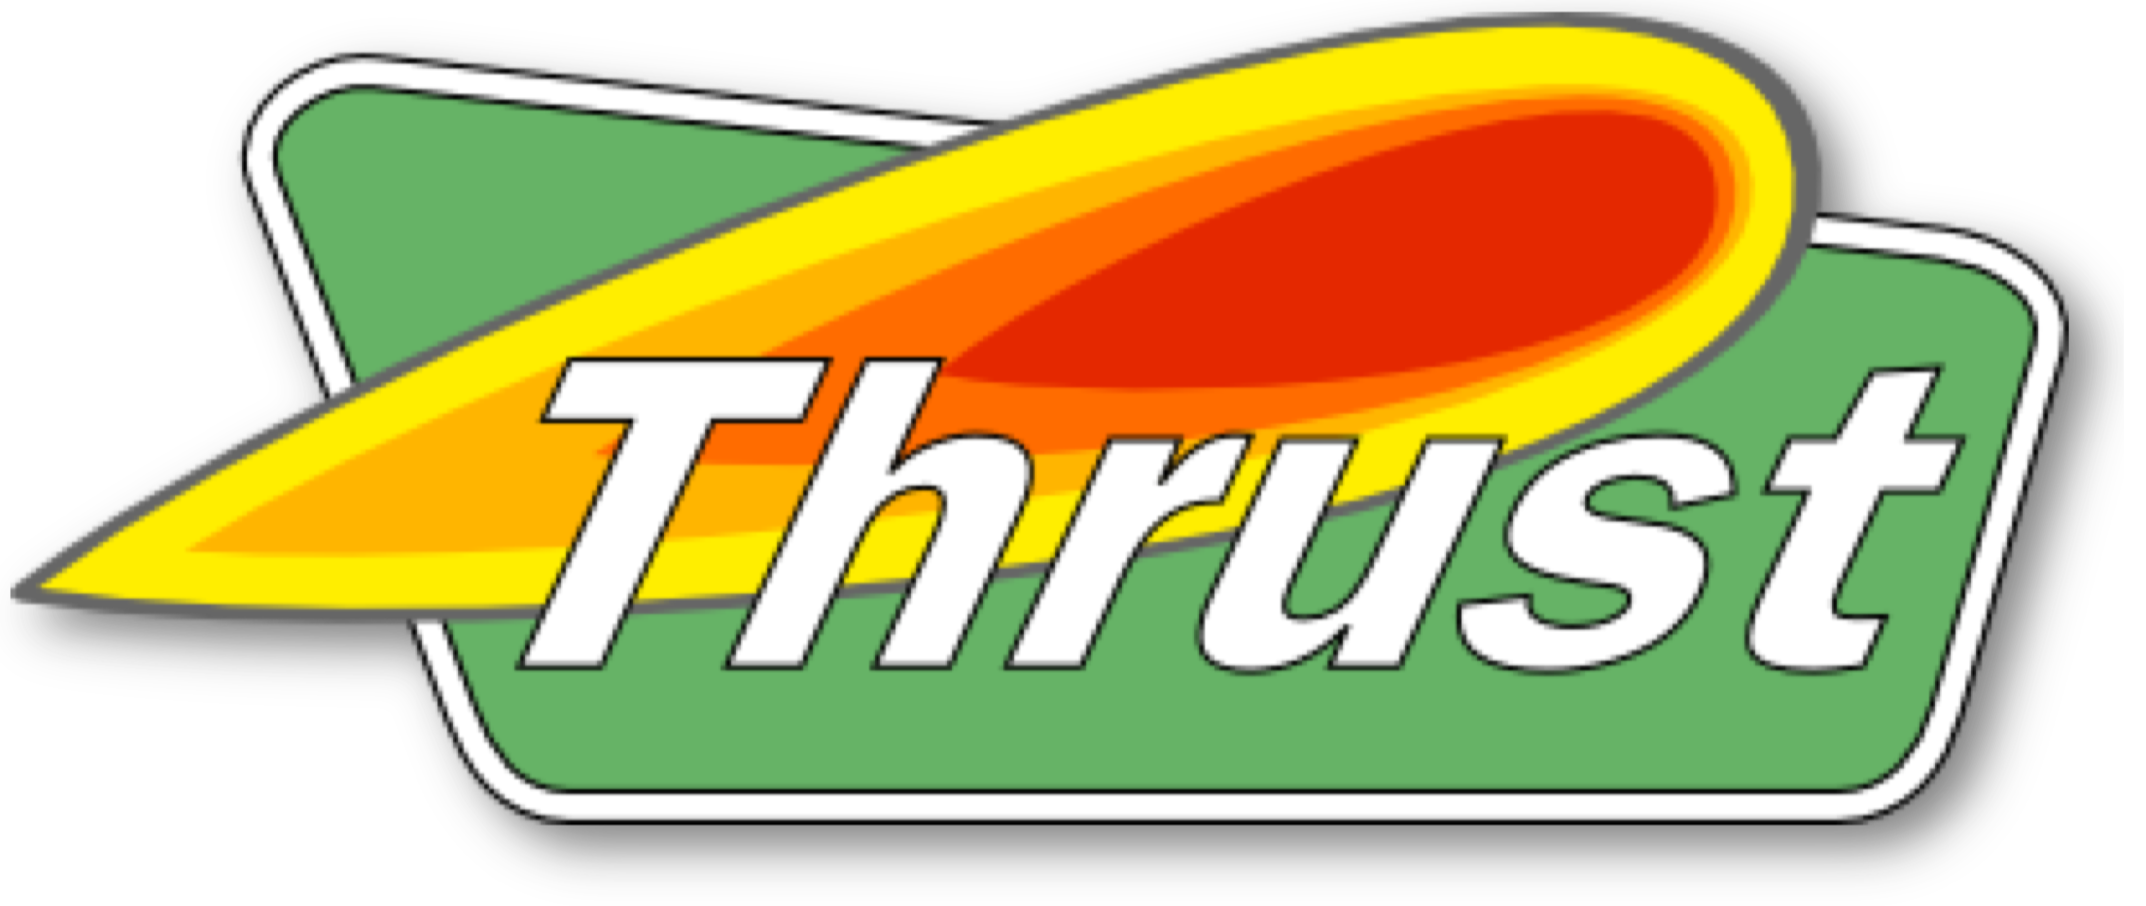 /env/presentation/nvidia/thrust_logo.png